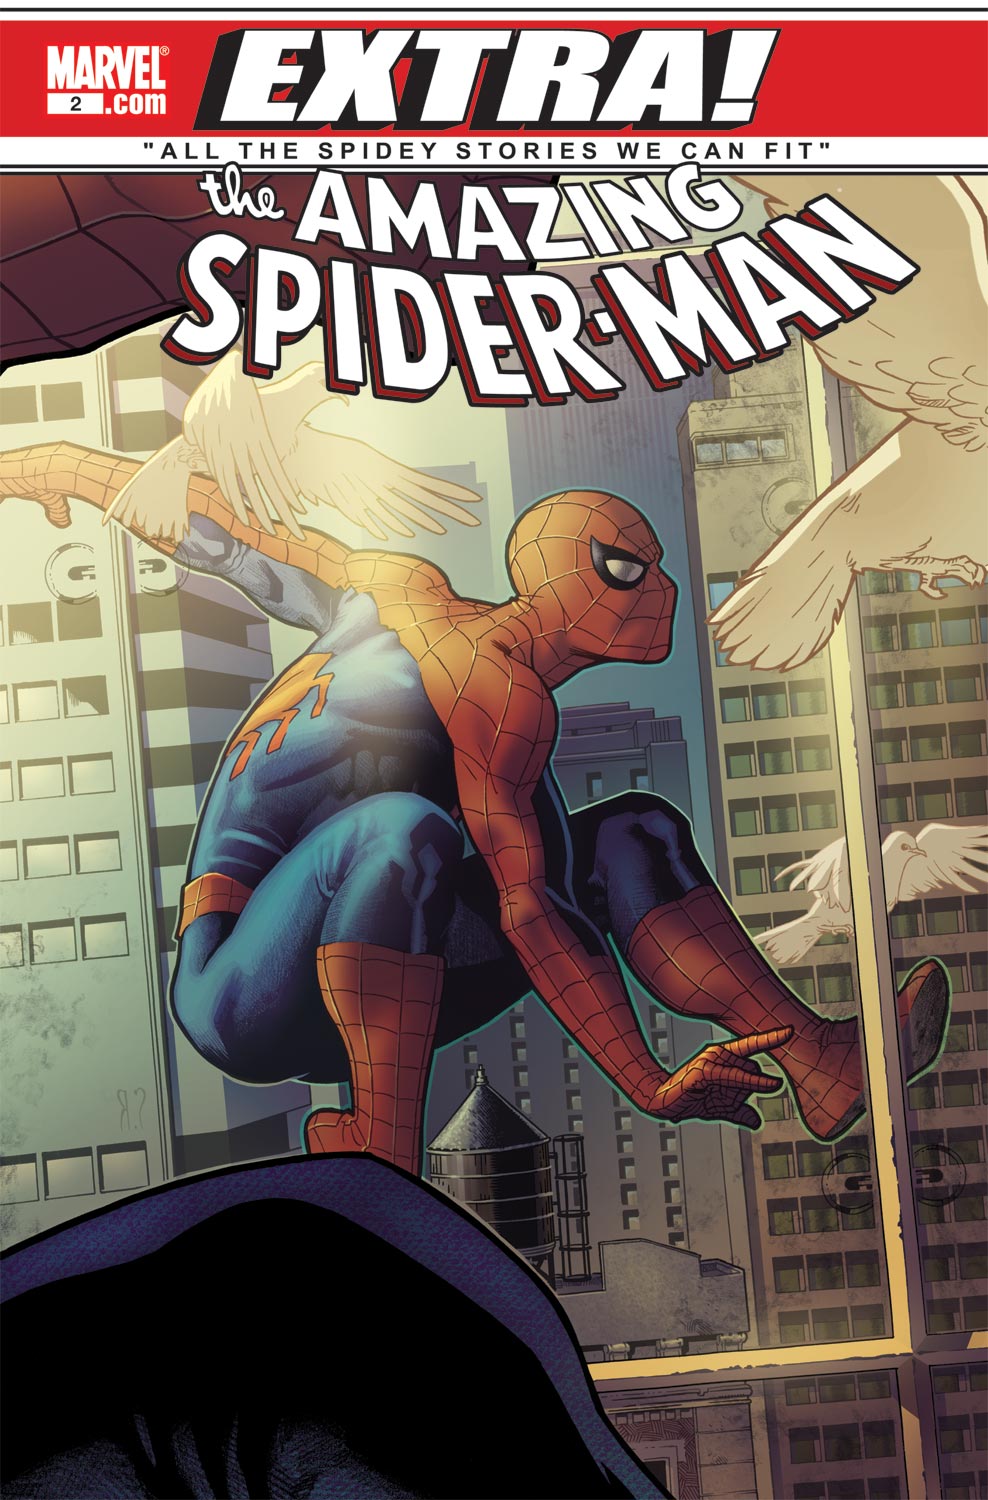 Amazing Spider-Man: Extra! (2008) #2